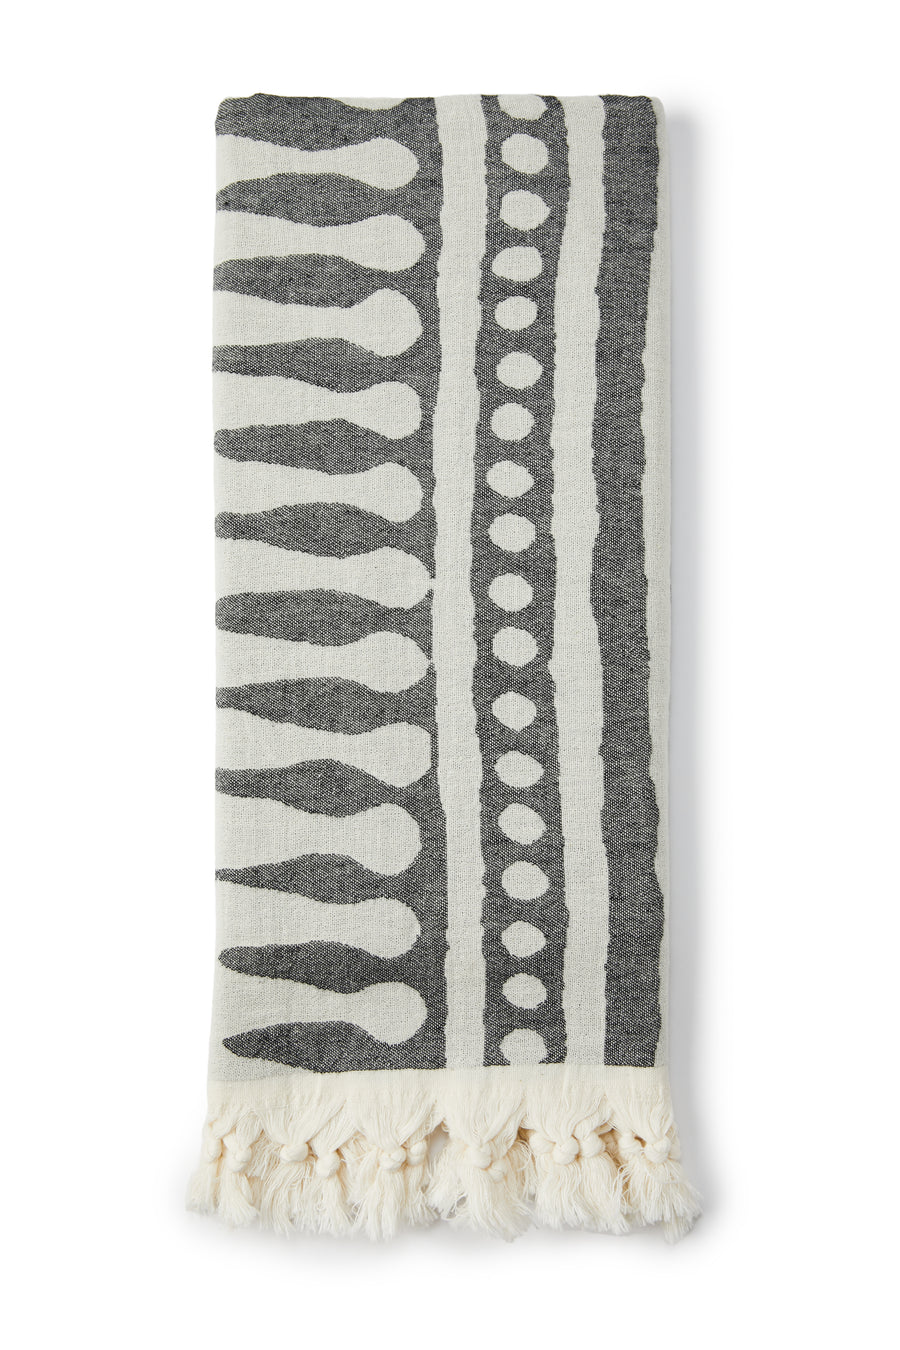 Tribal Stripe Turkish Towel Black & Cream